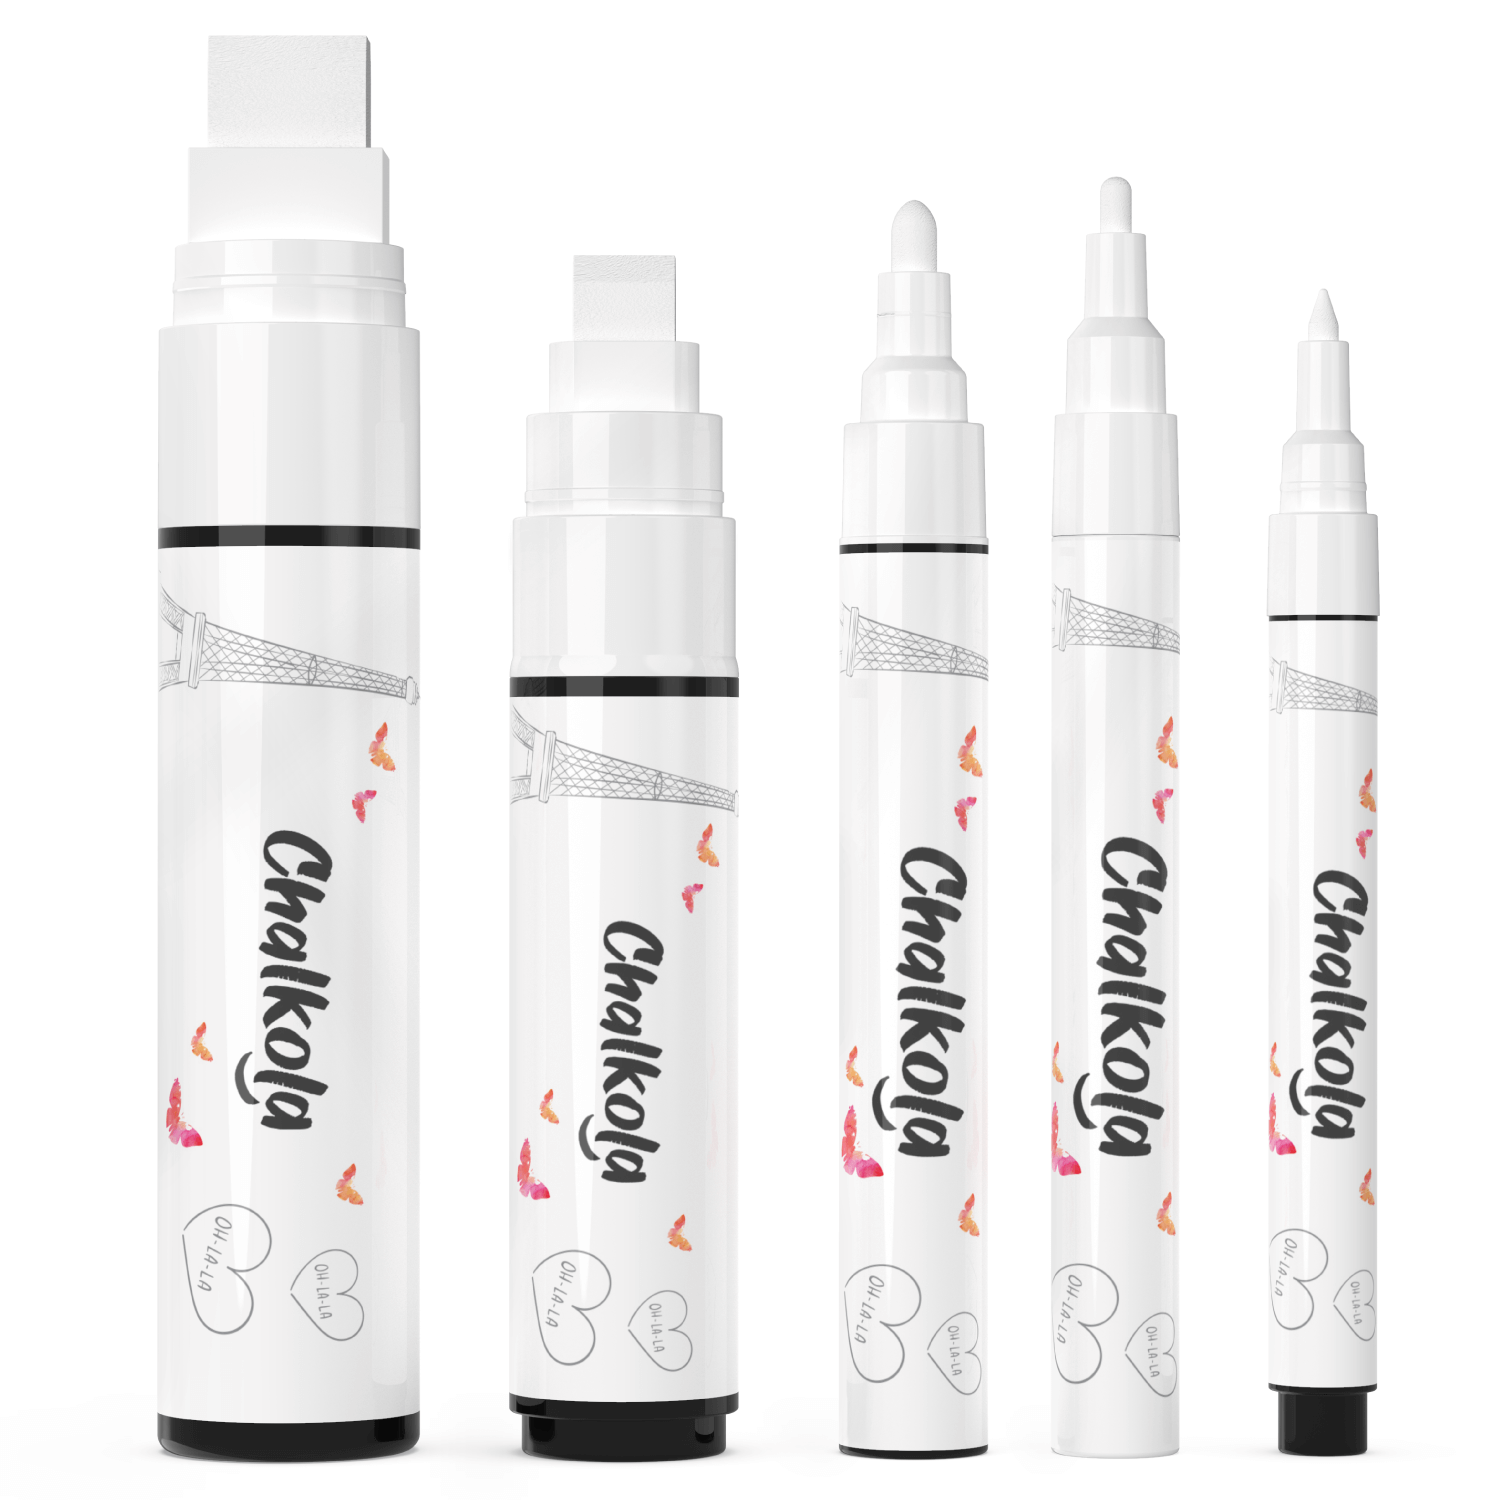 Acrylic Paint Marker Pens - Pack of 40, Fine Tip - Chalkola Art Supply